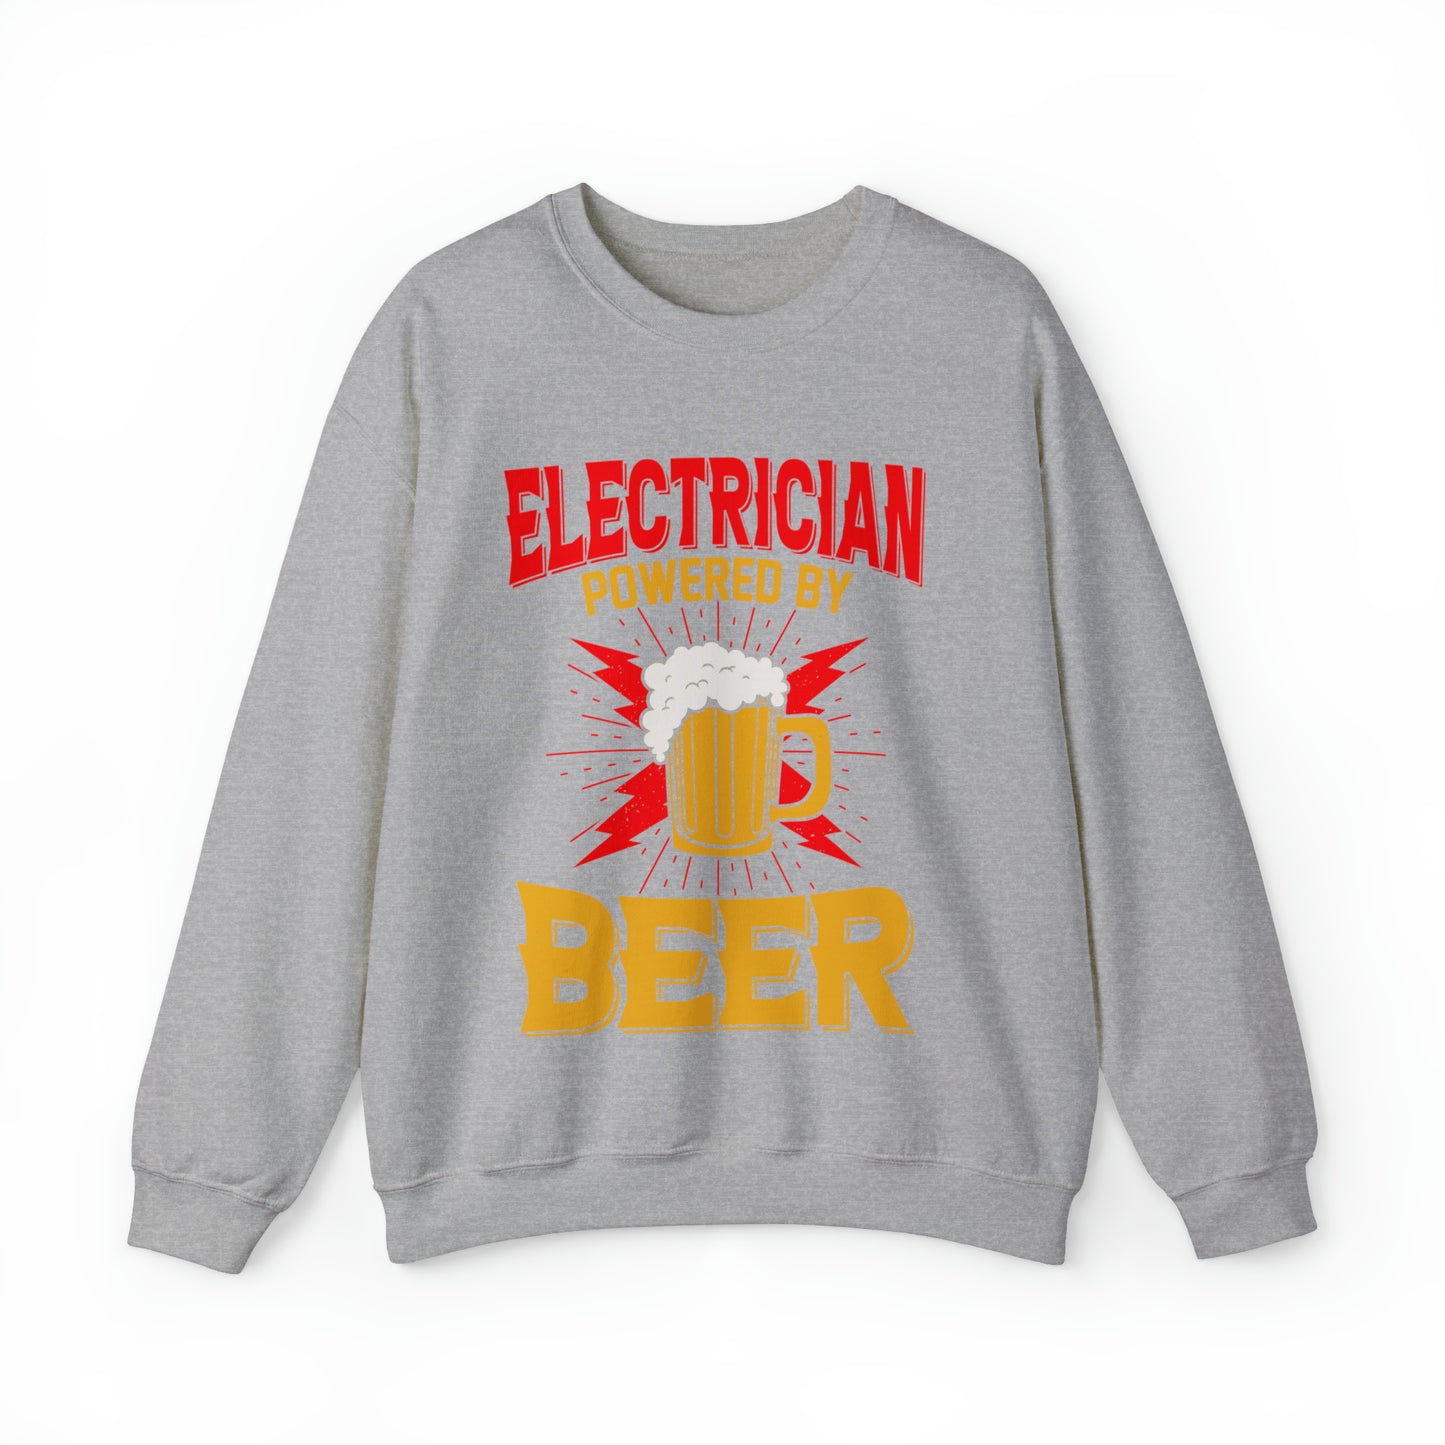 Electrician Powered by Beer Sweatshirt for Men, Funny Sweatshirt for Electrician Gift for Husband, Electrician Sweatshirt, S865